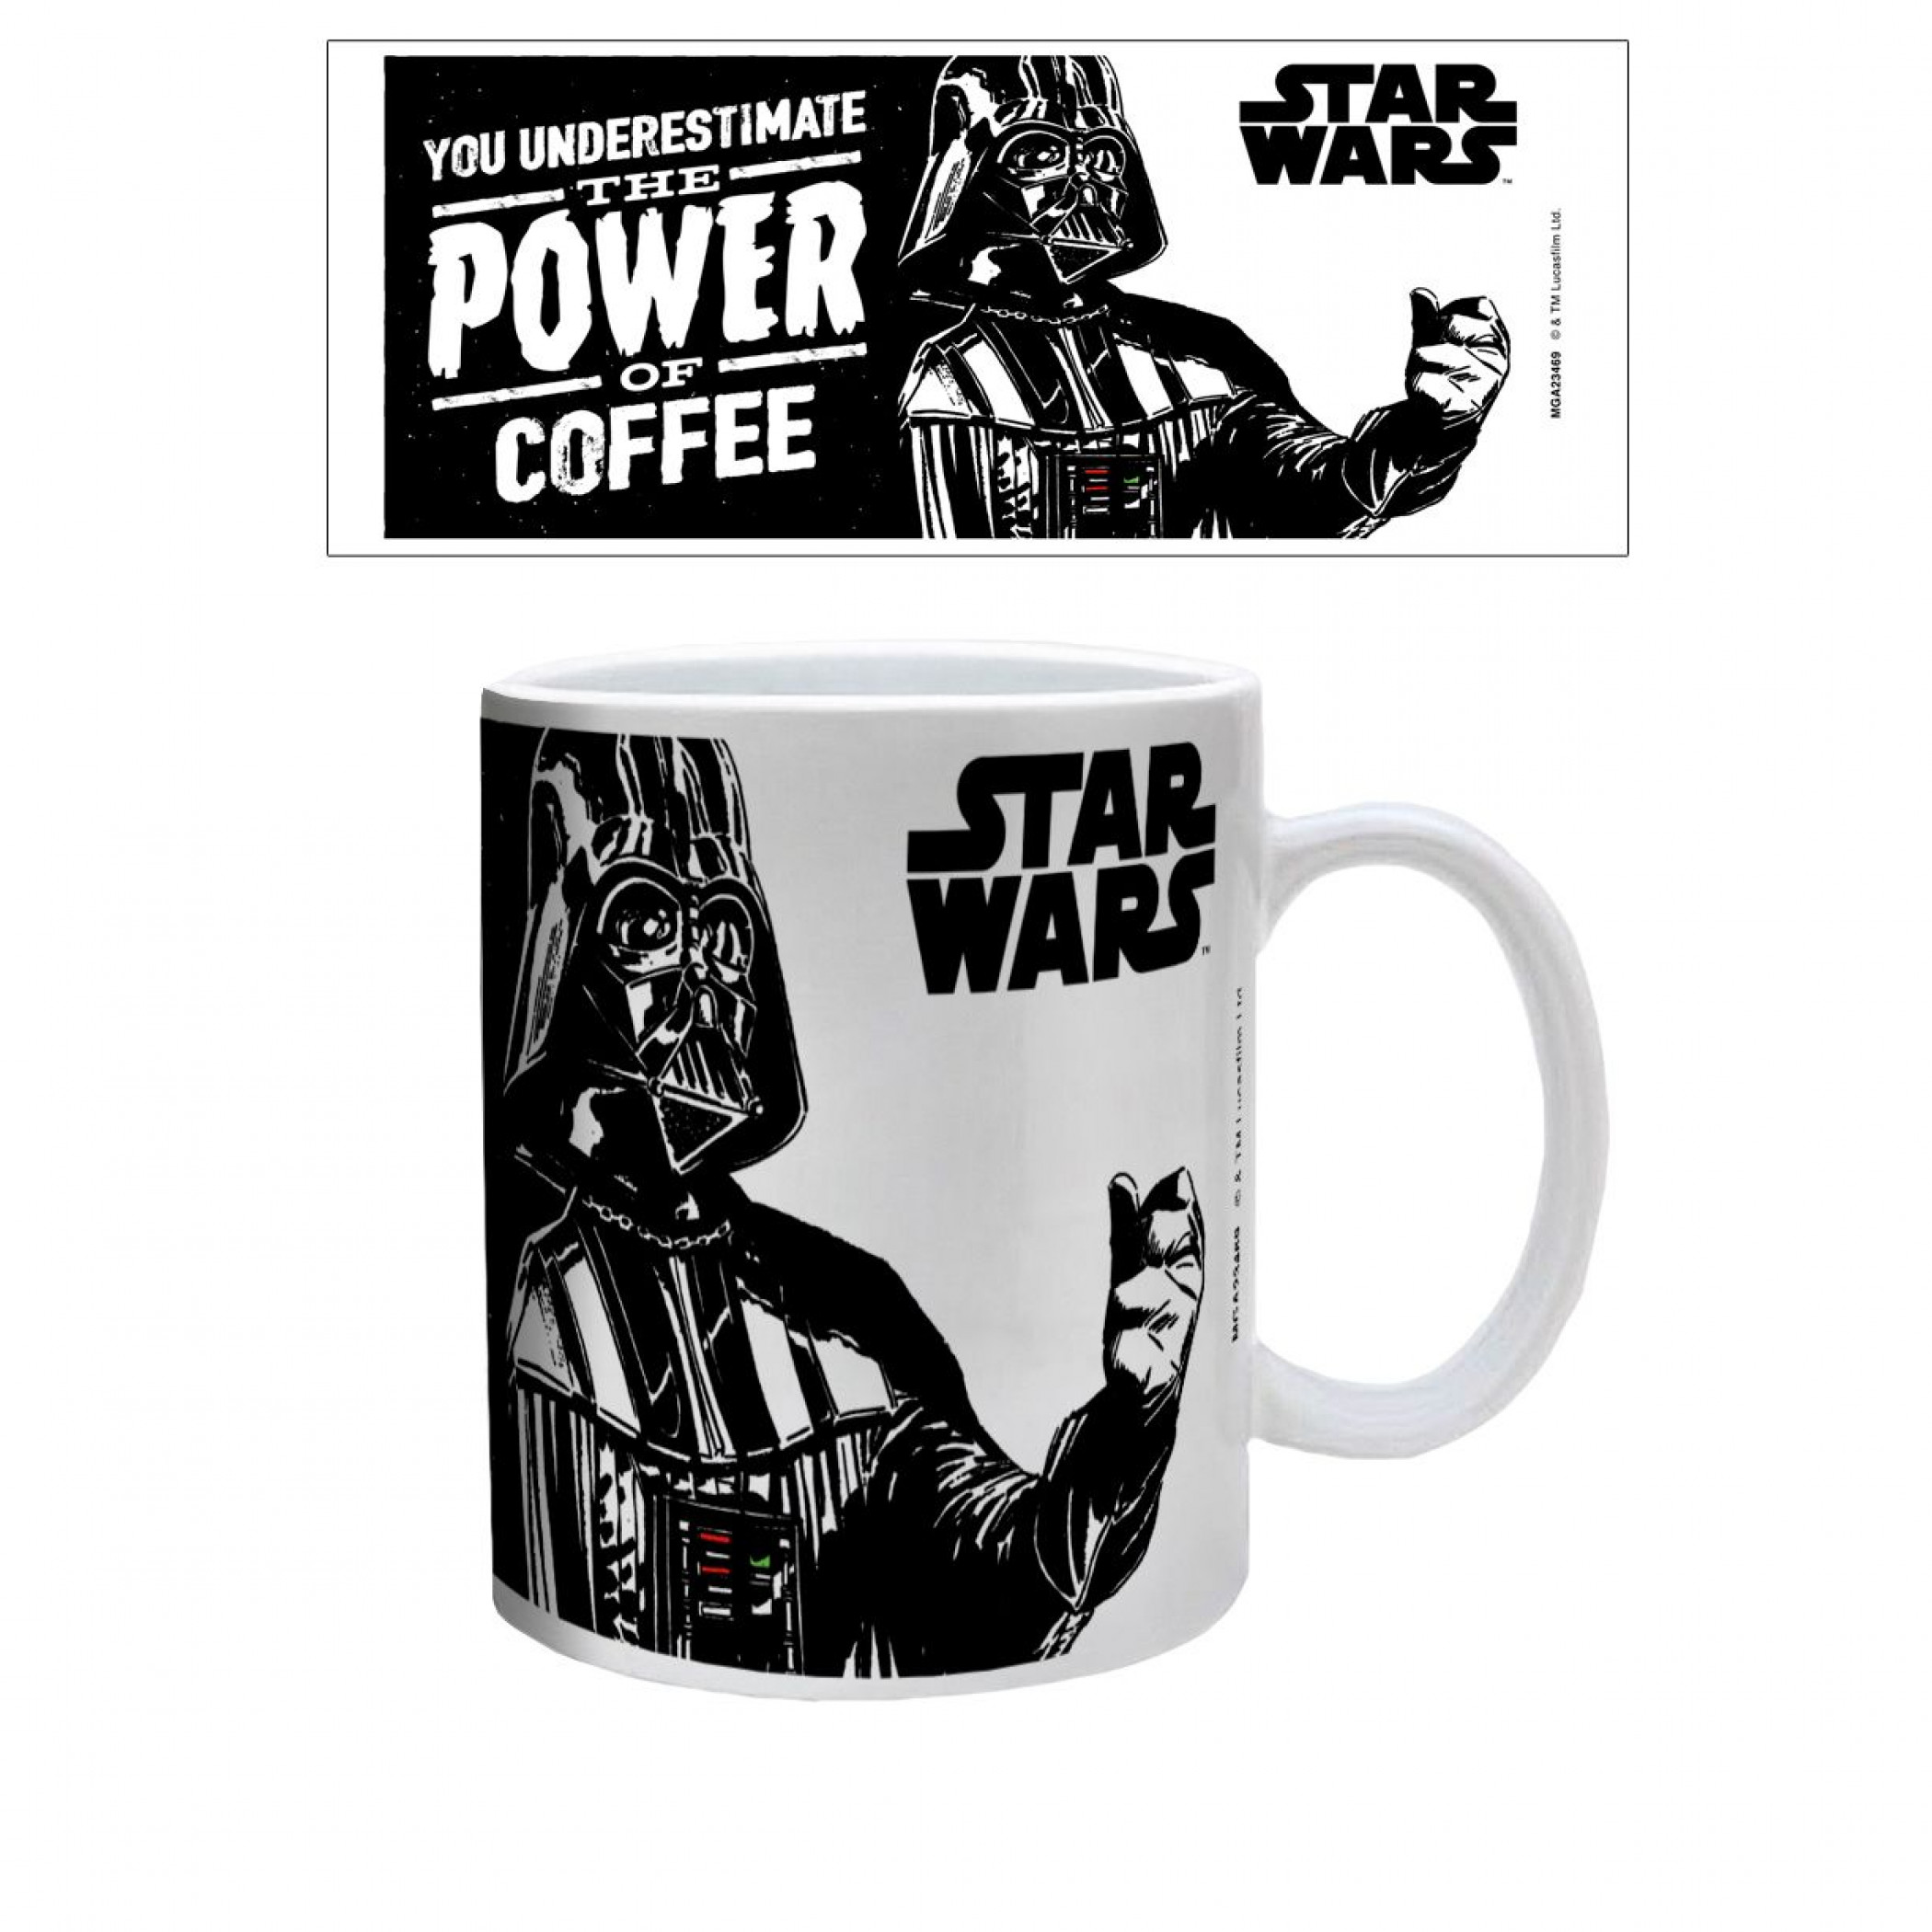 Star Wars The Power of Coffee 11 oz. Ceramic Mug